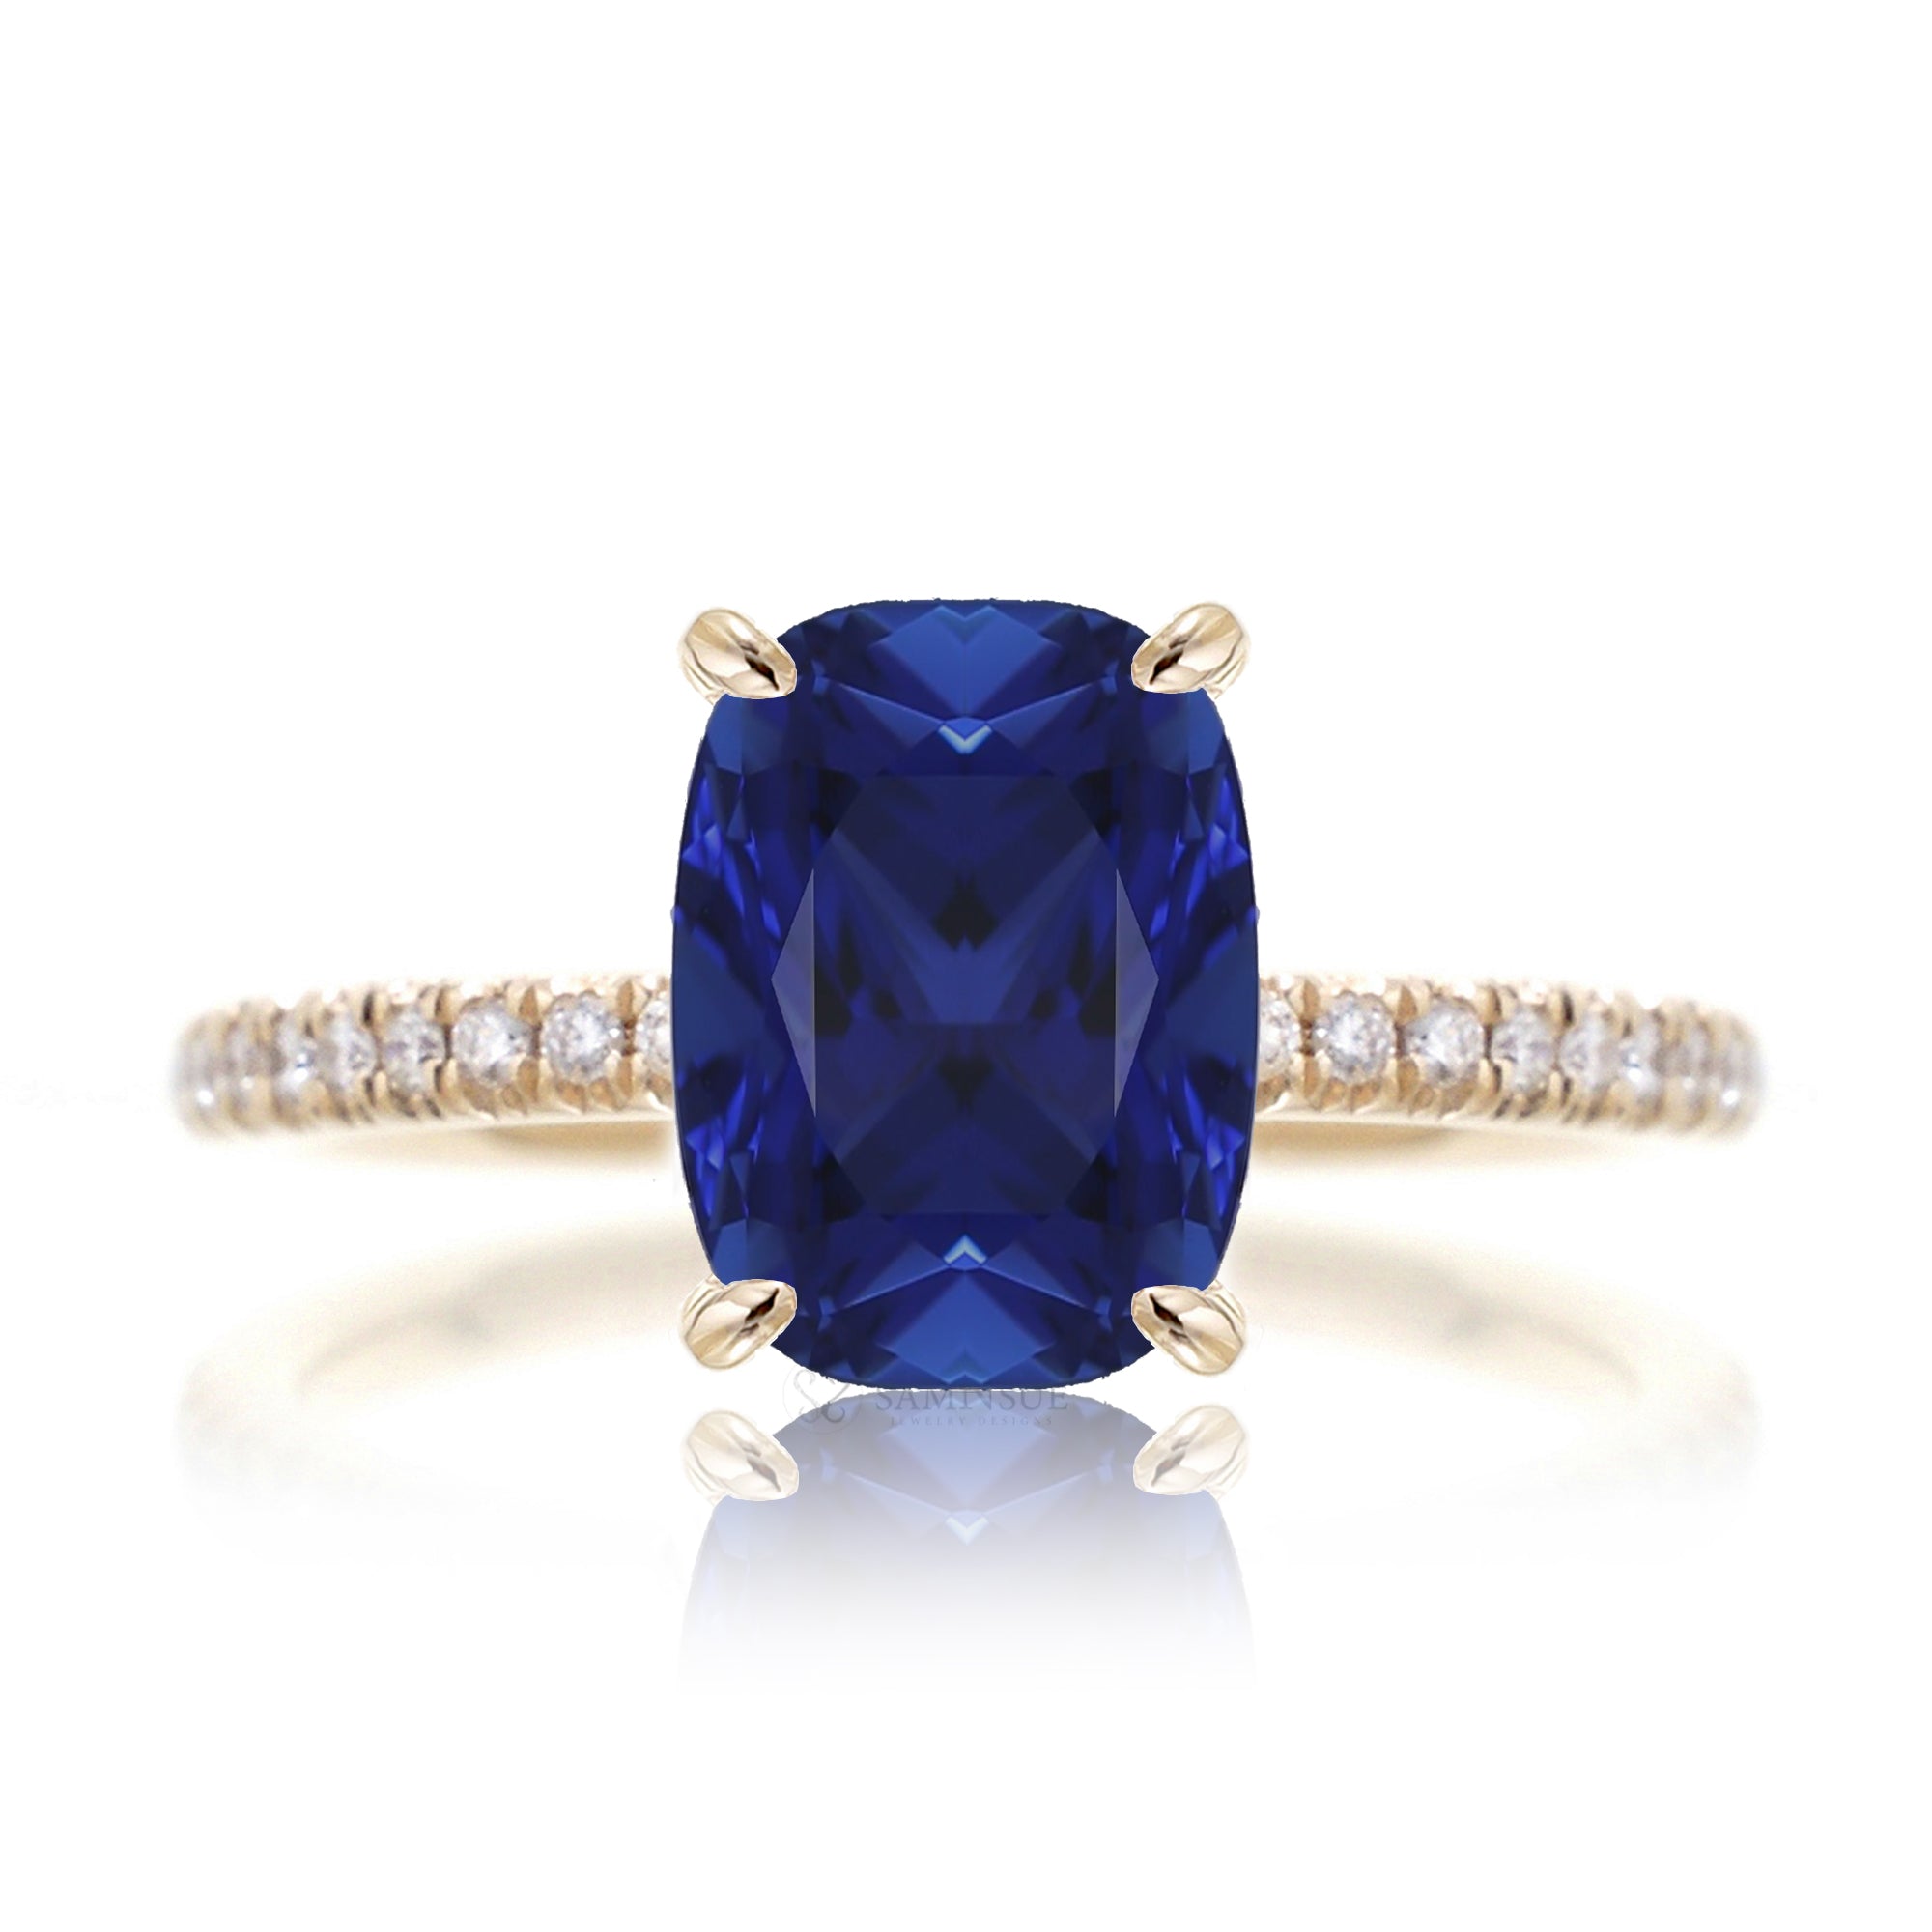 Cushion cut blue sapphire diamond engagement ring yellow gold - the Ava